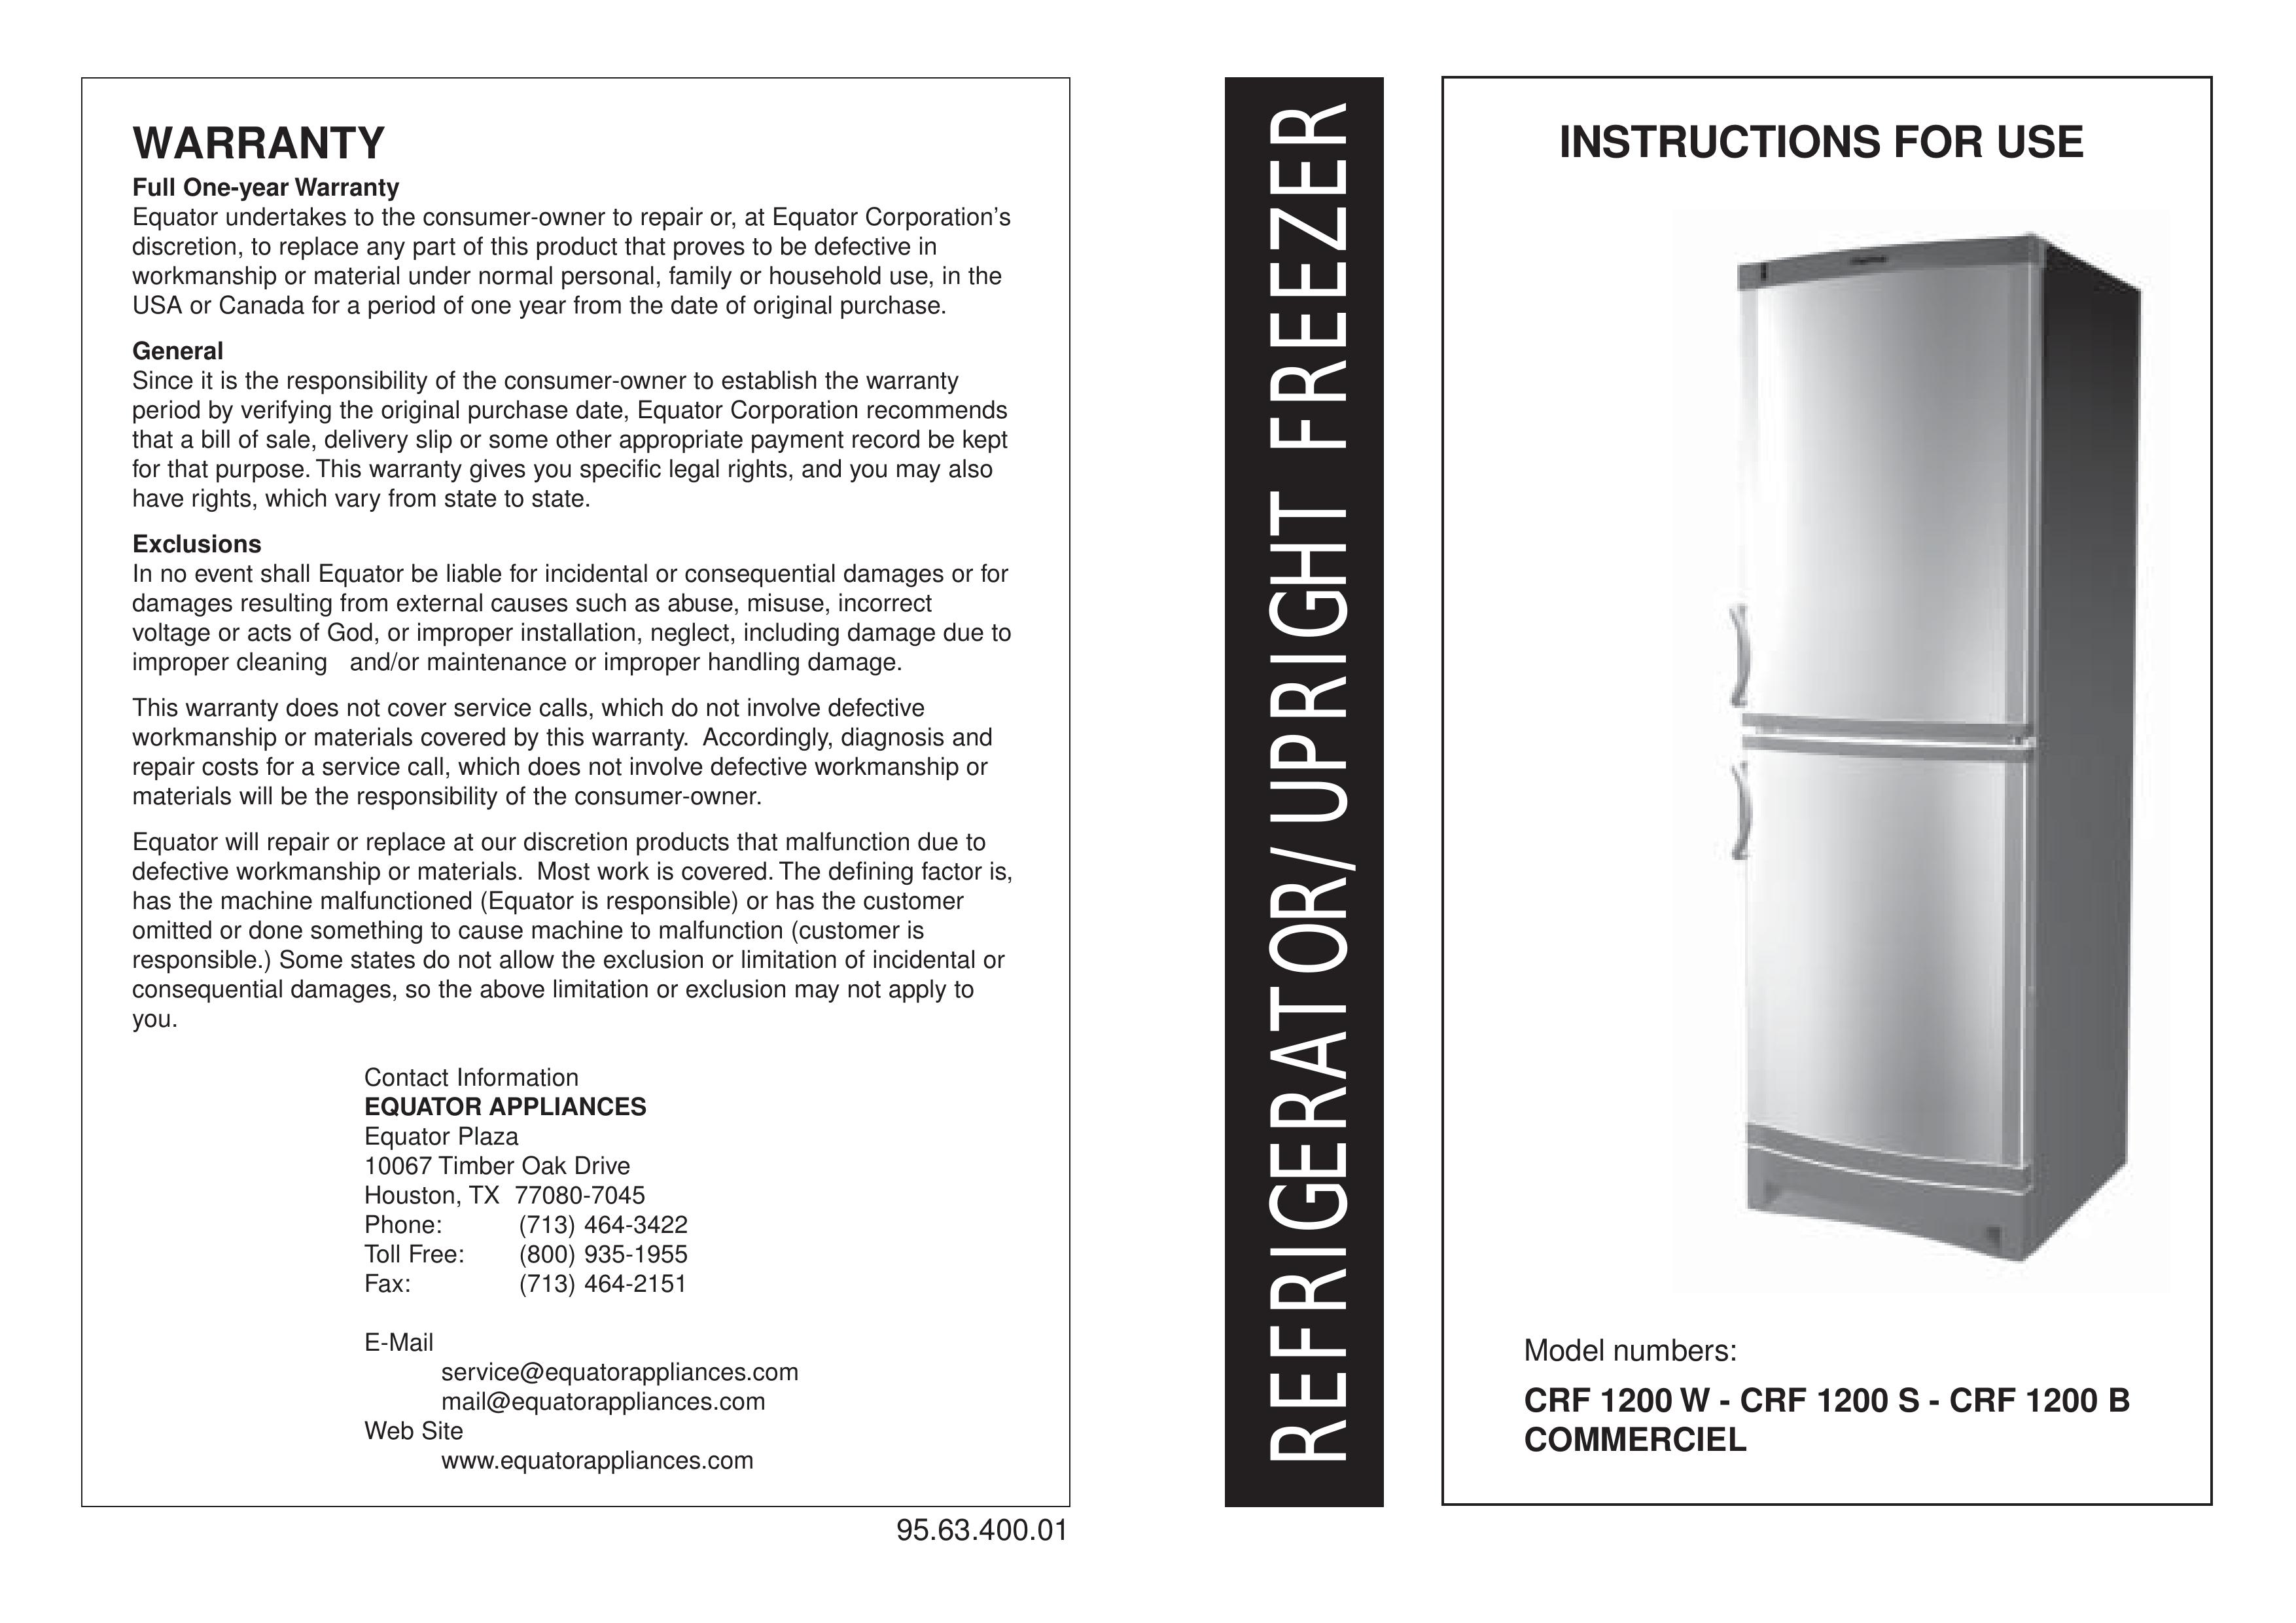 Equator CRF 1200 S Refrigerator User Manual